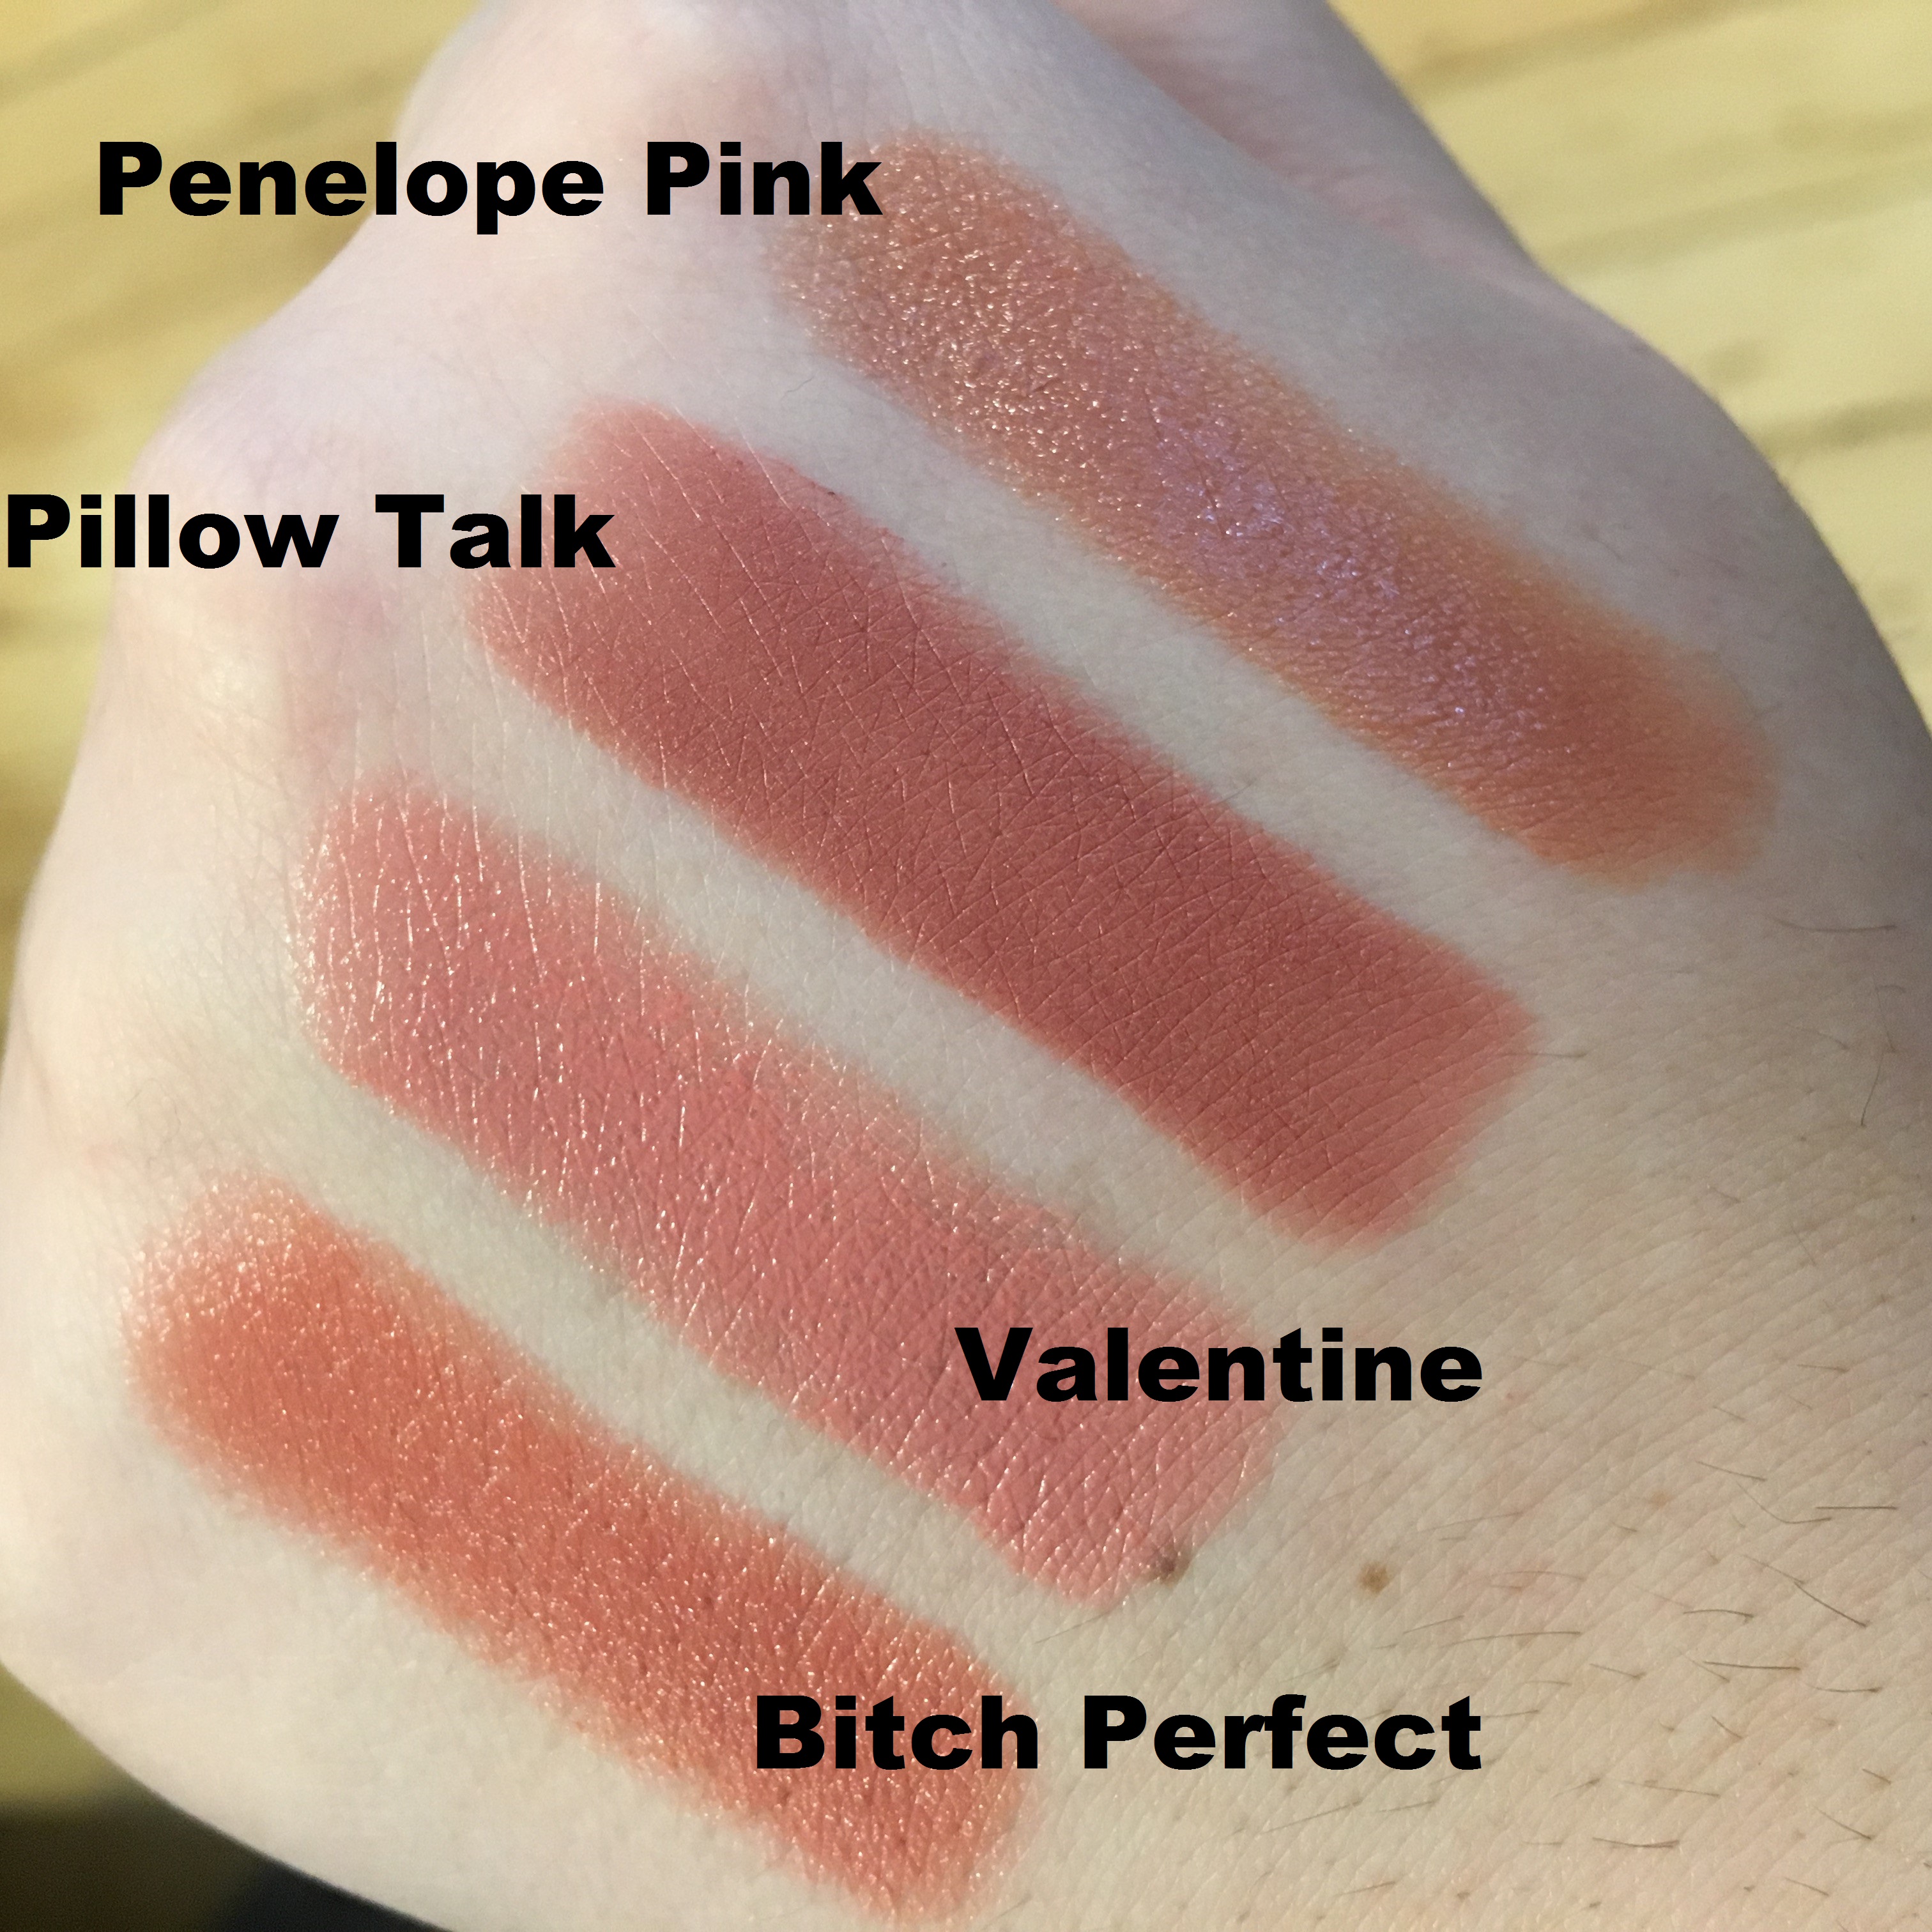 à¸�à¸¥à¸�à¸²à¸£à¸�à¹�à¸�à¸«à¸²à¸£à¸¹à¸�à¸�à¸²à¸�à¸ªà¸³à¸«à¸£à¸±à¸� charlotte tilbury penelope lipstick